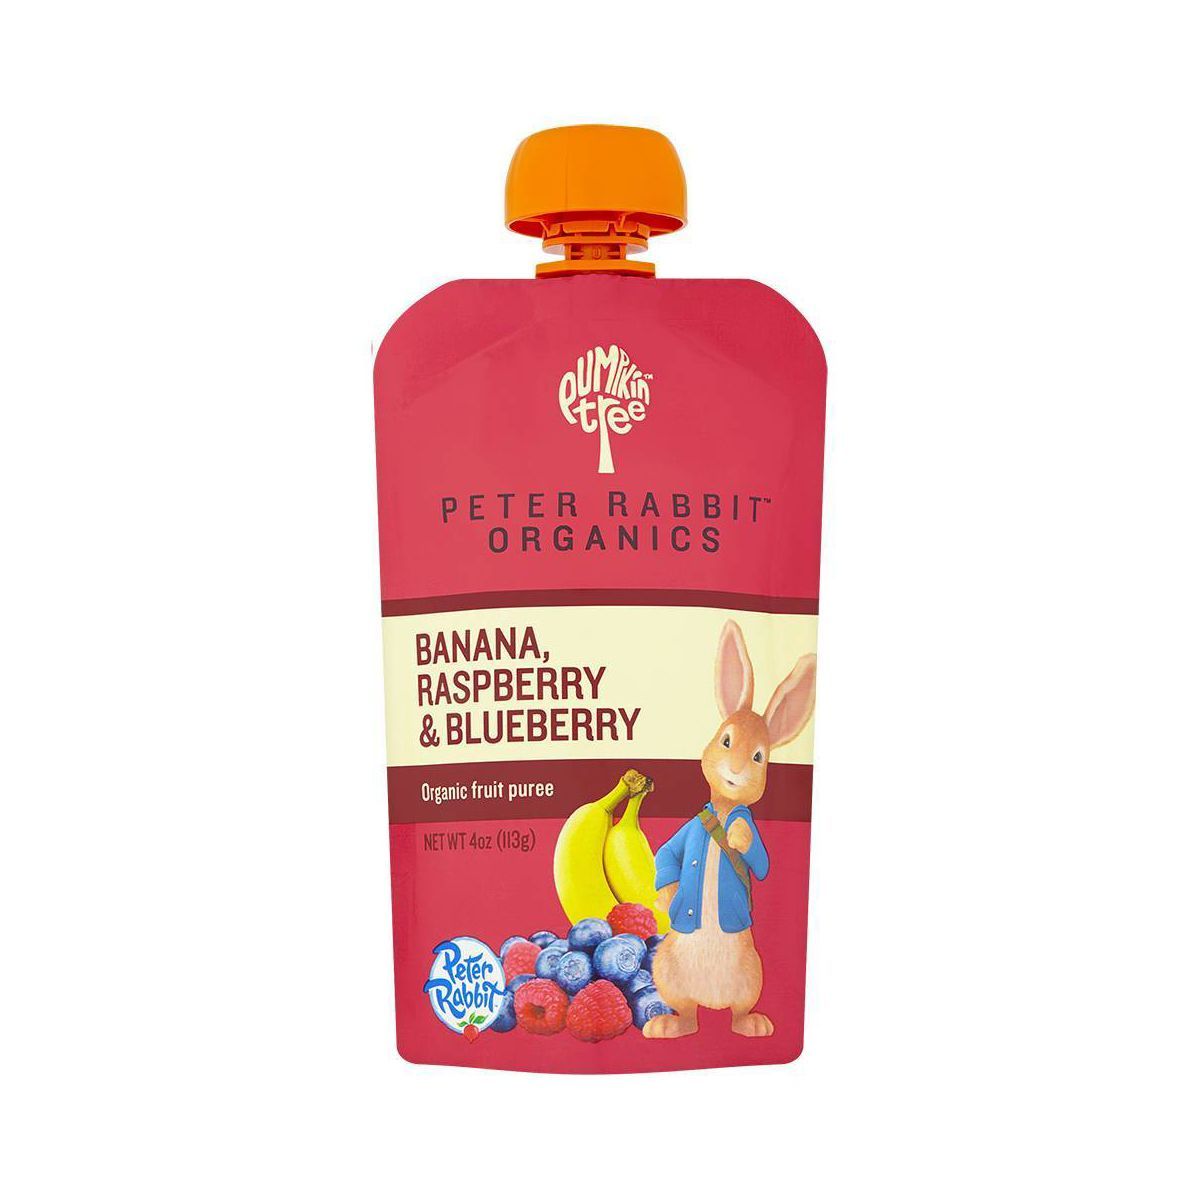 Peter Rabbit Organics Banana Raspberry & Blueberry Baby Food Pouch - 4oz | Target